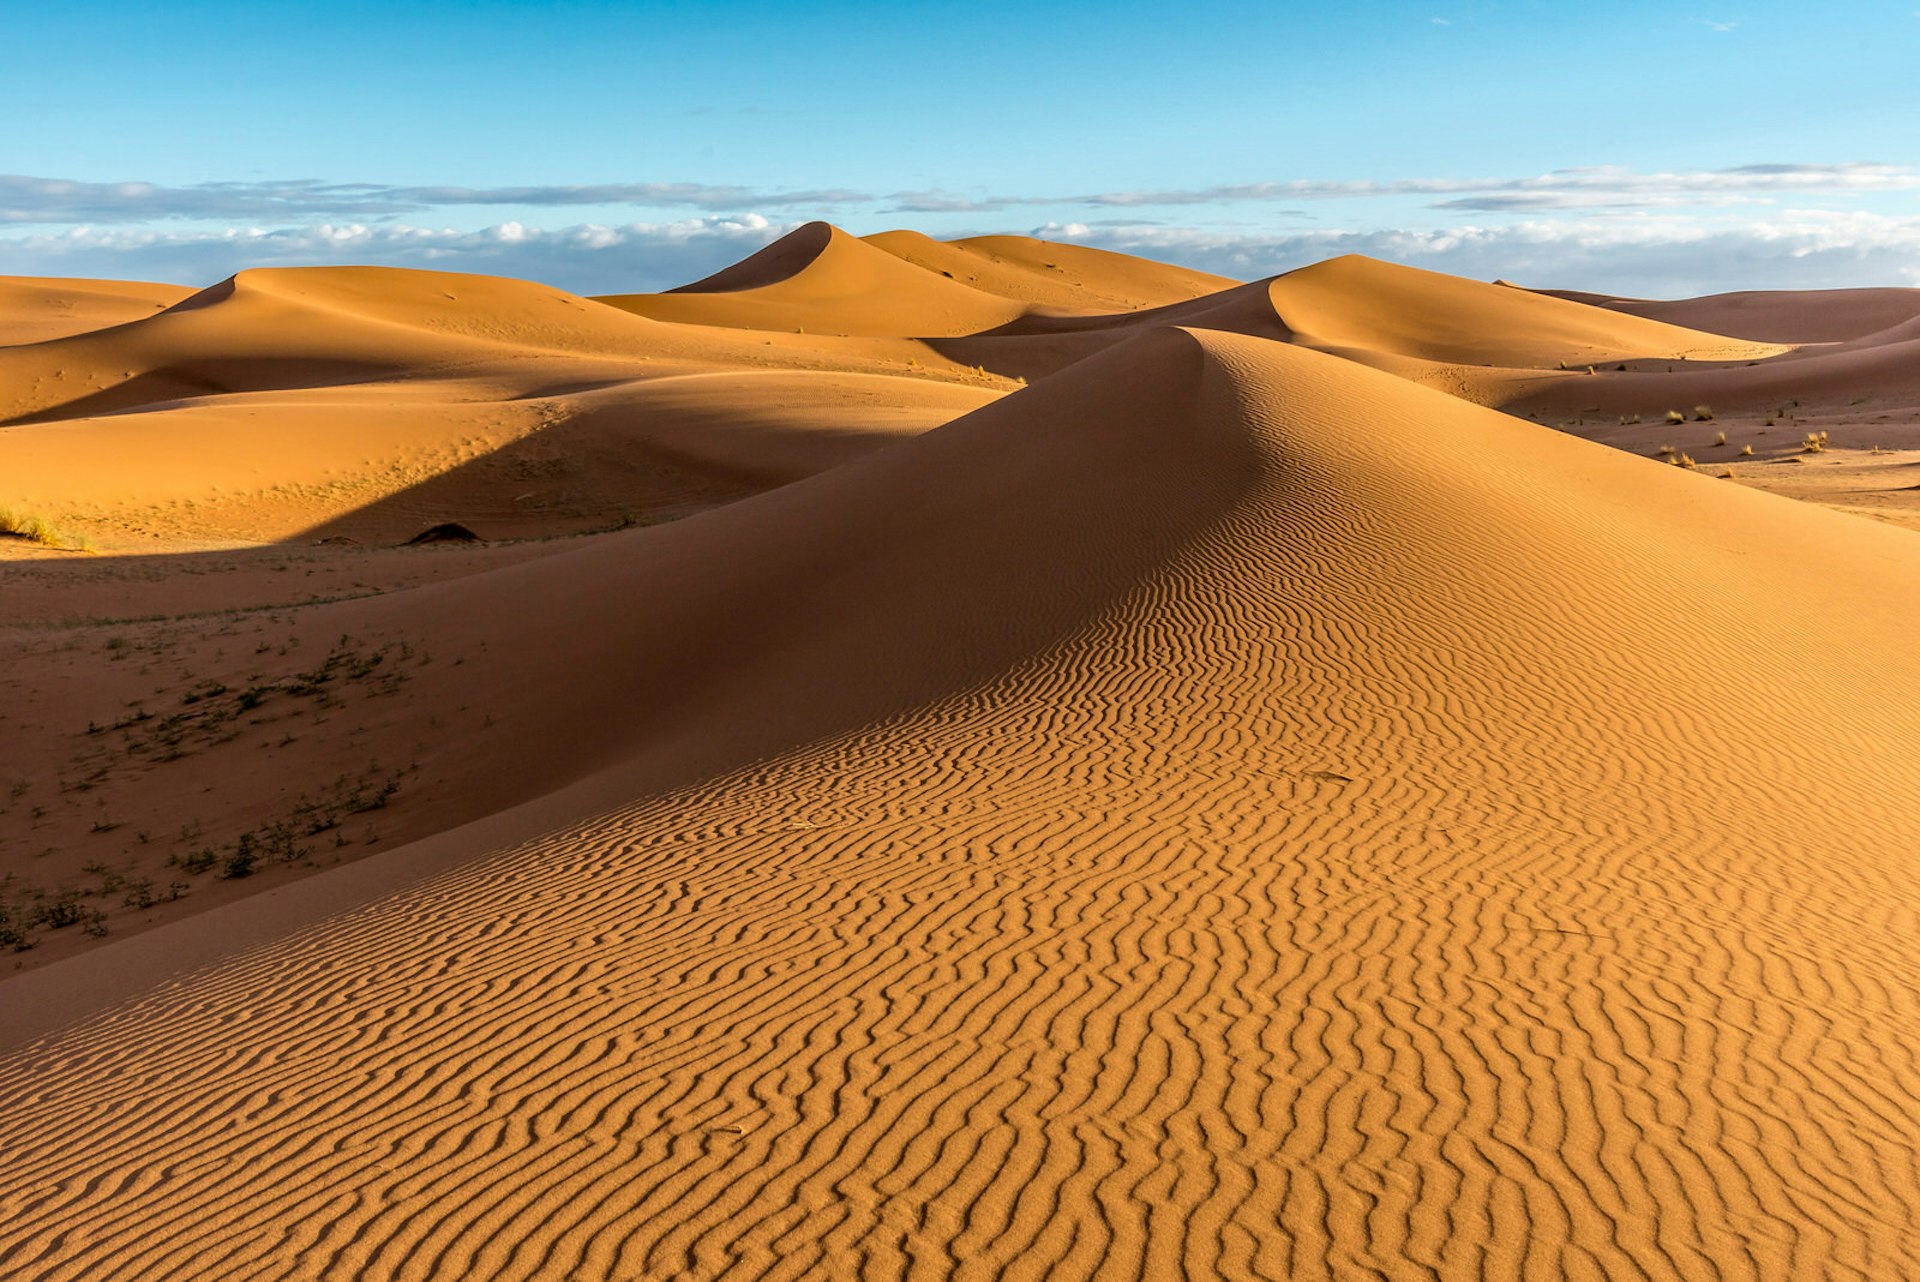 Sand dunes in Erg Chigaga with blue sky, Morocco © Zdenar_Adamsen / Shutterstock